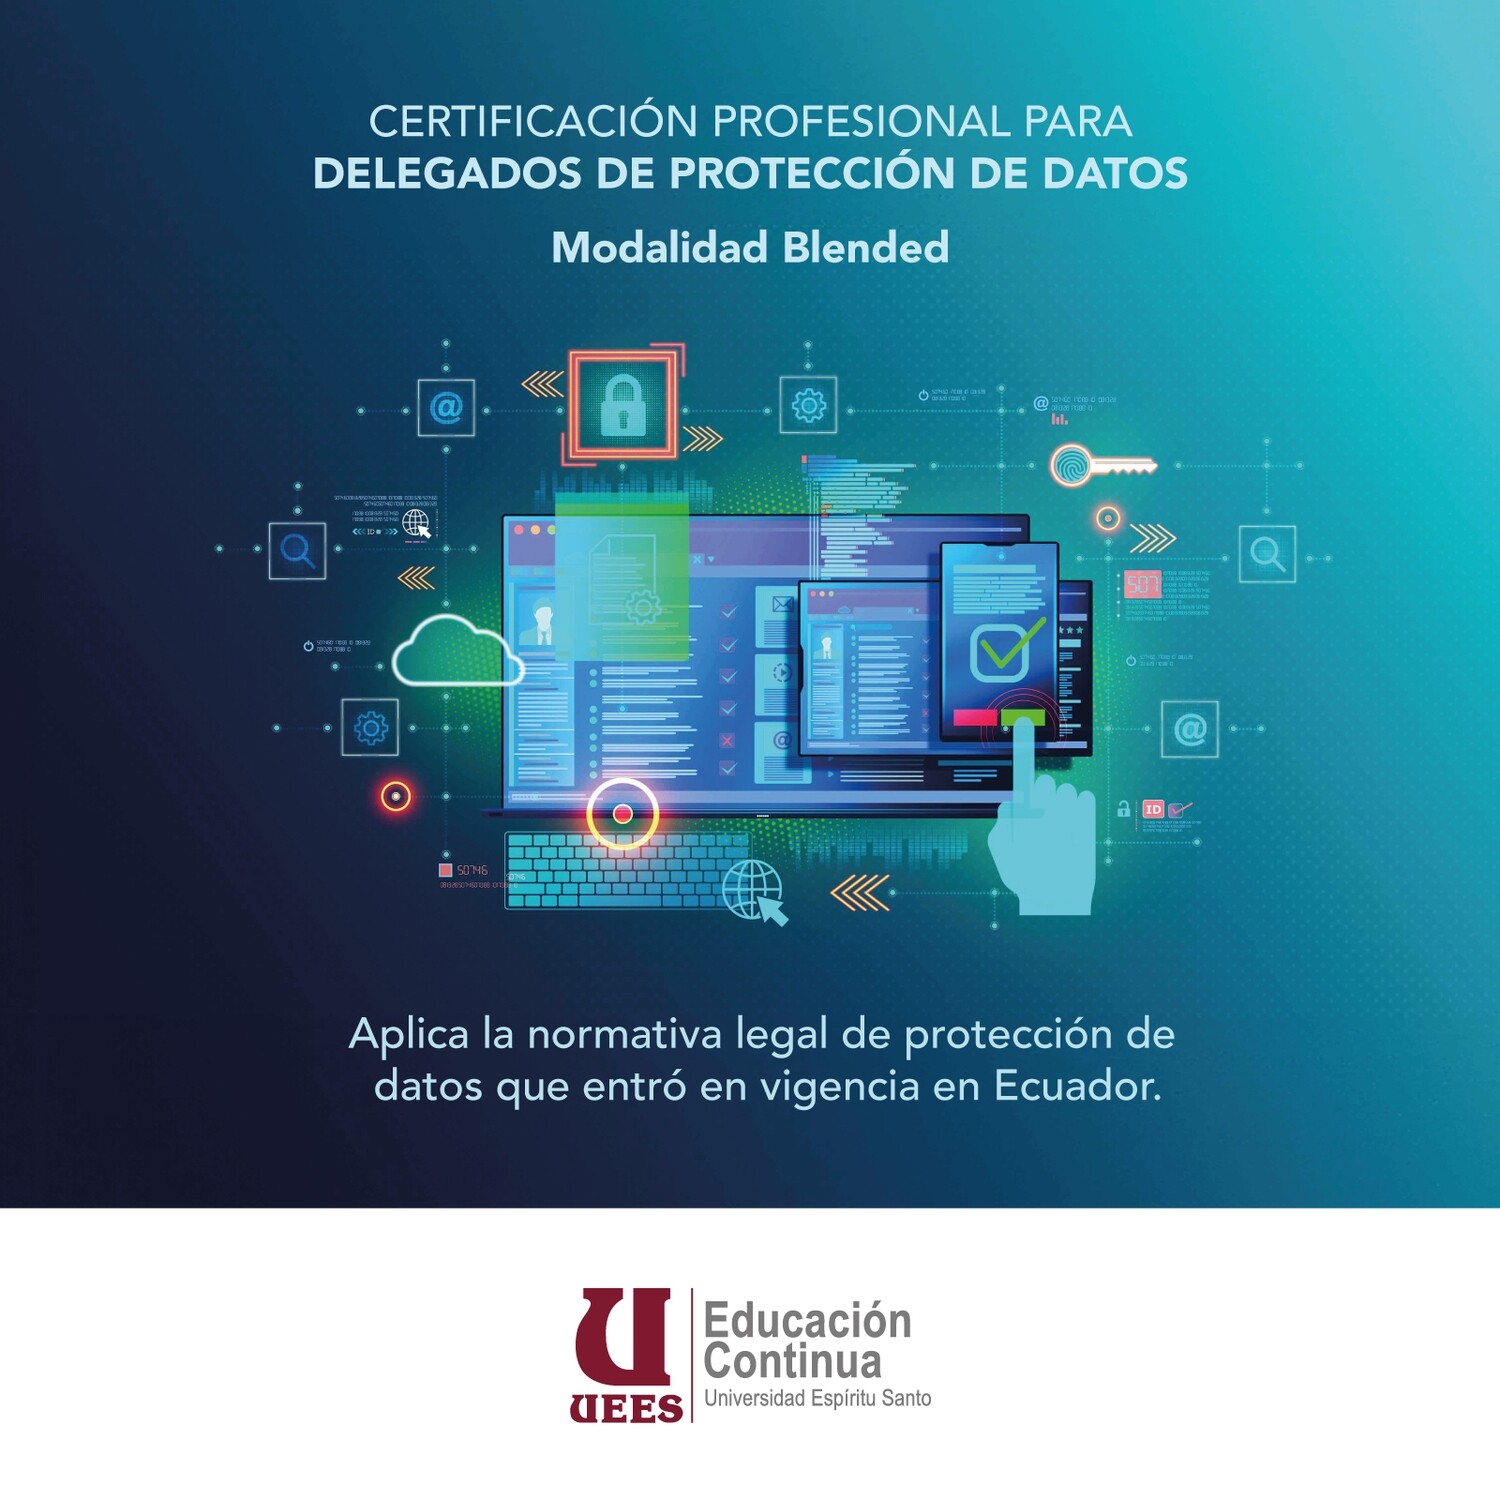 Certificación Profesional de Delegados de Protección de Datos.